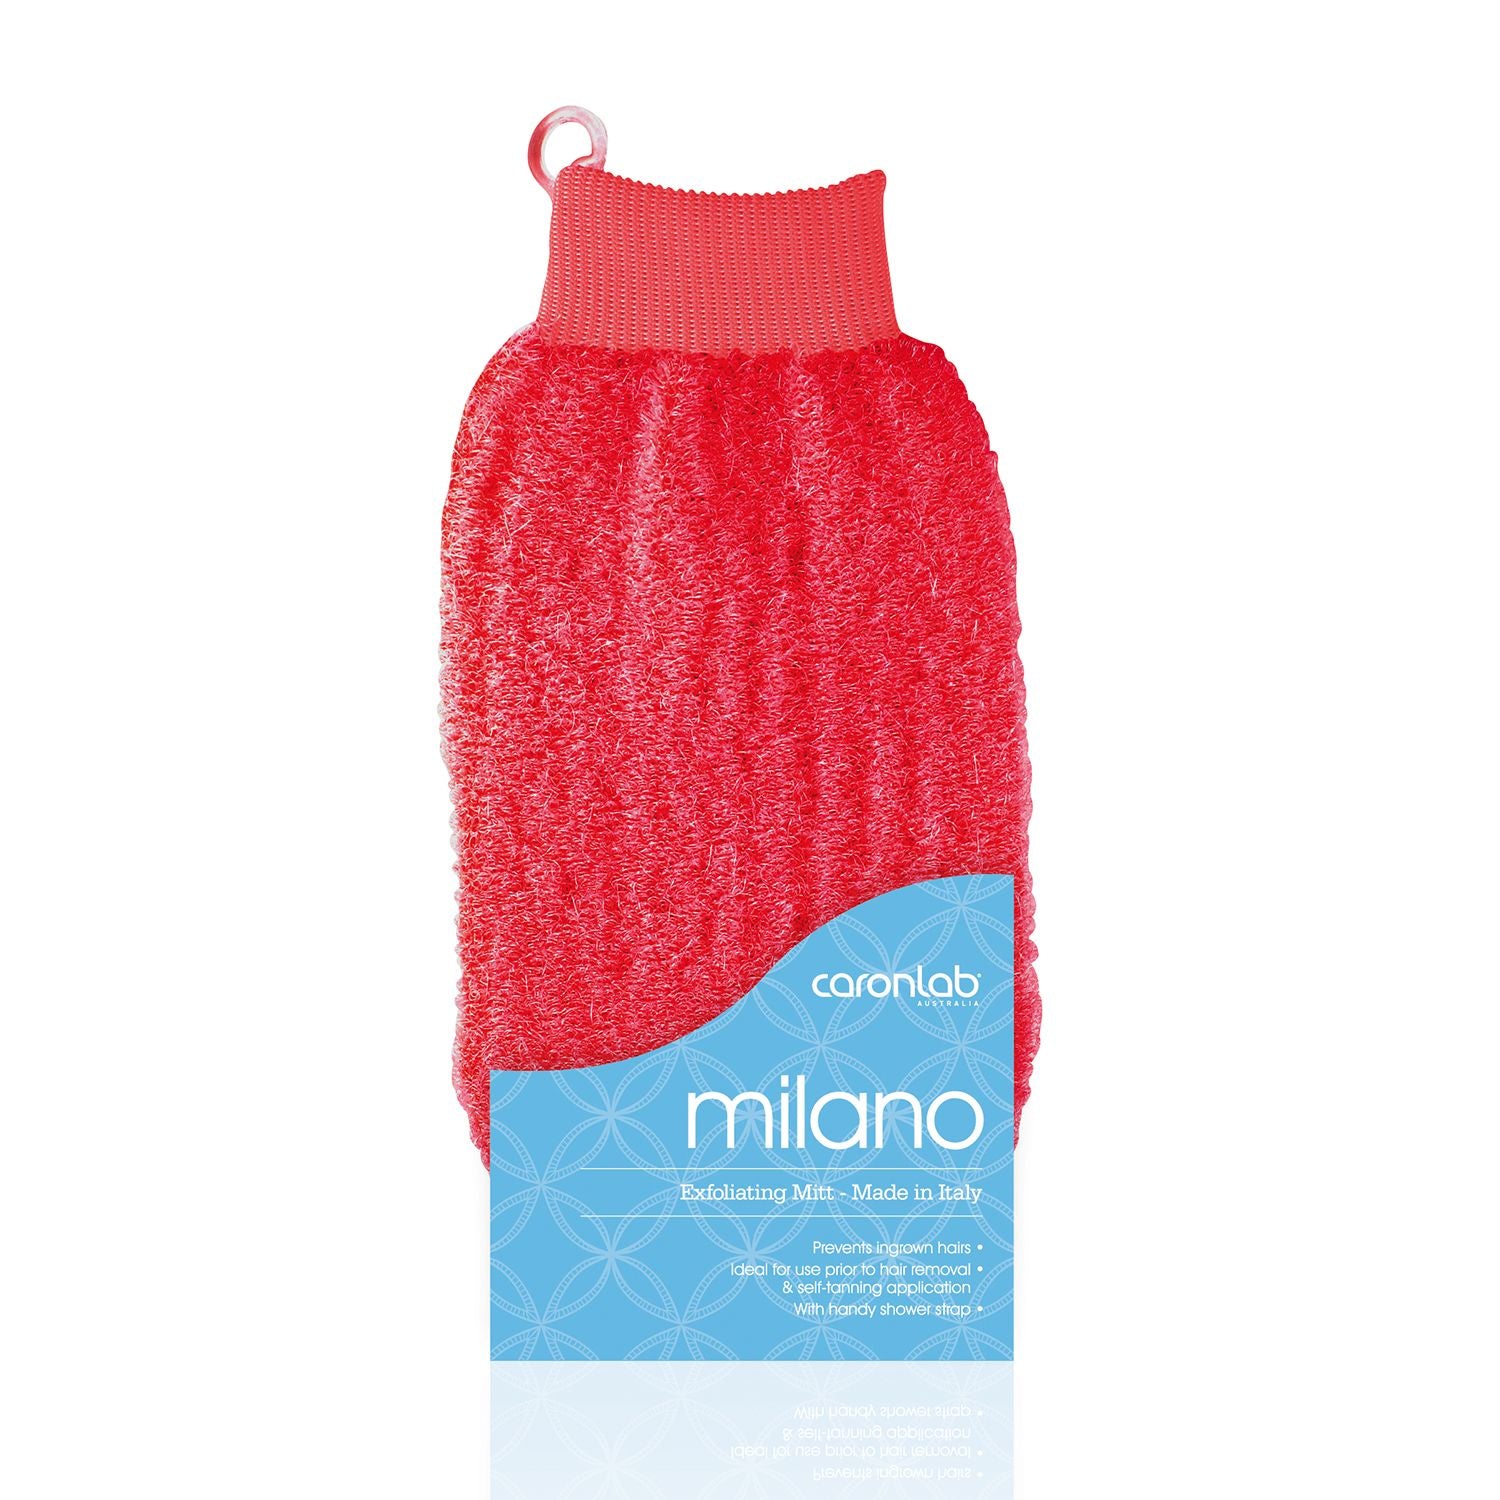 Caronlab Milano Massage Mitt - Red